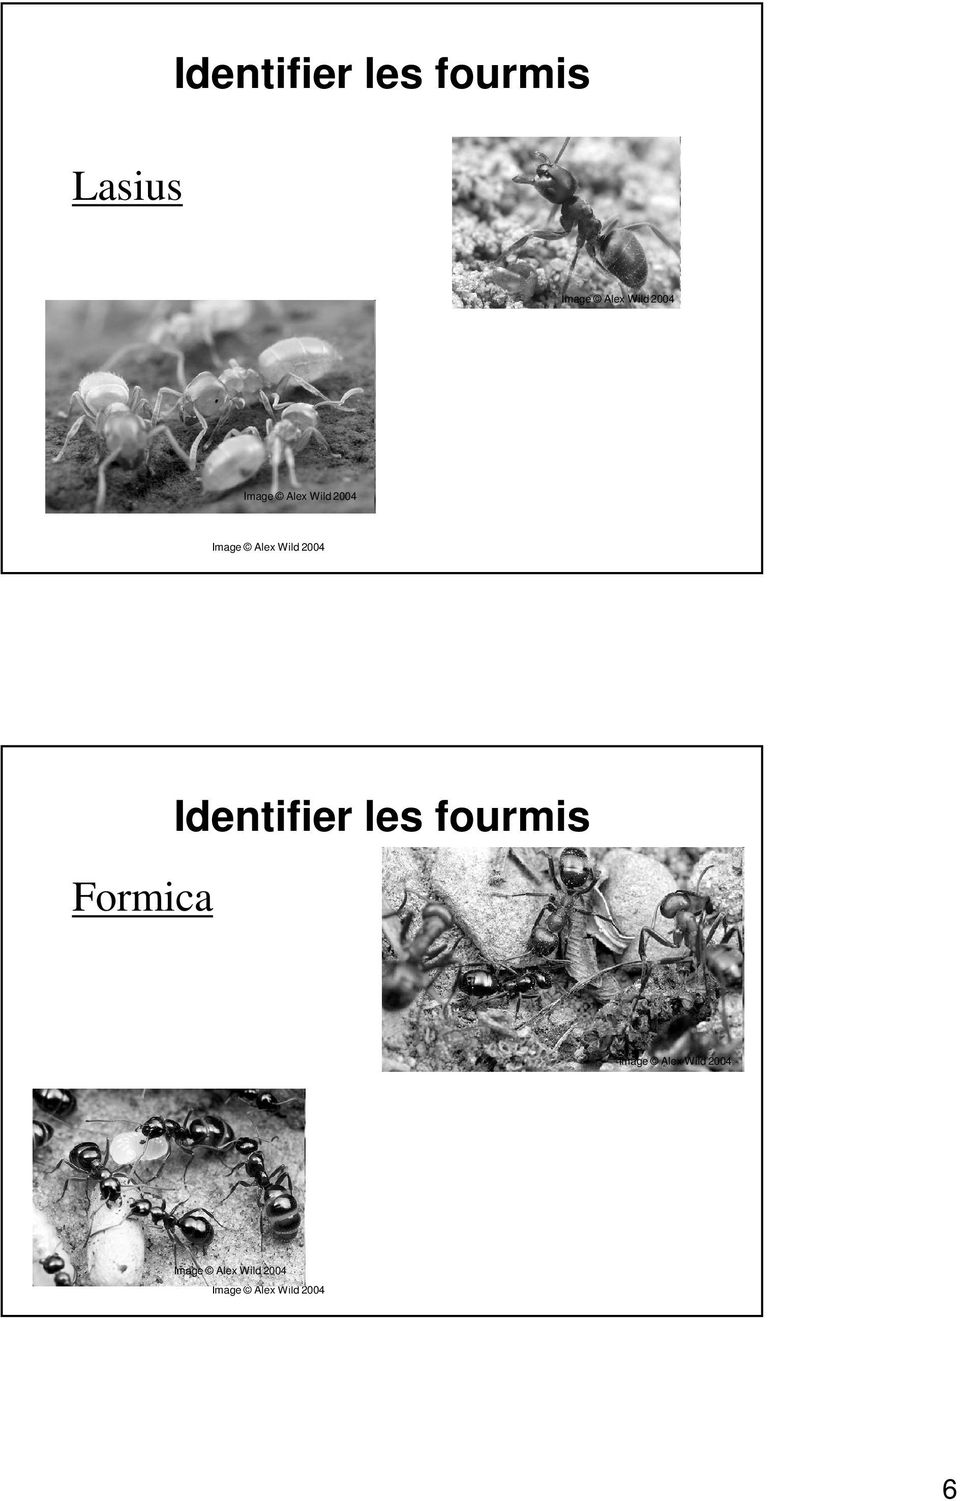 Formica Identifier les fourmis Image Alex Wild